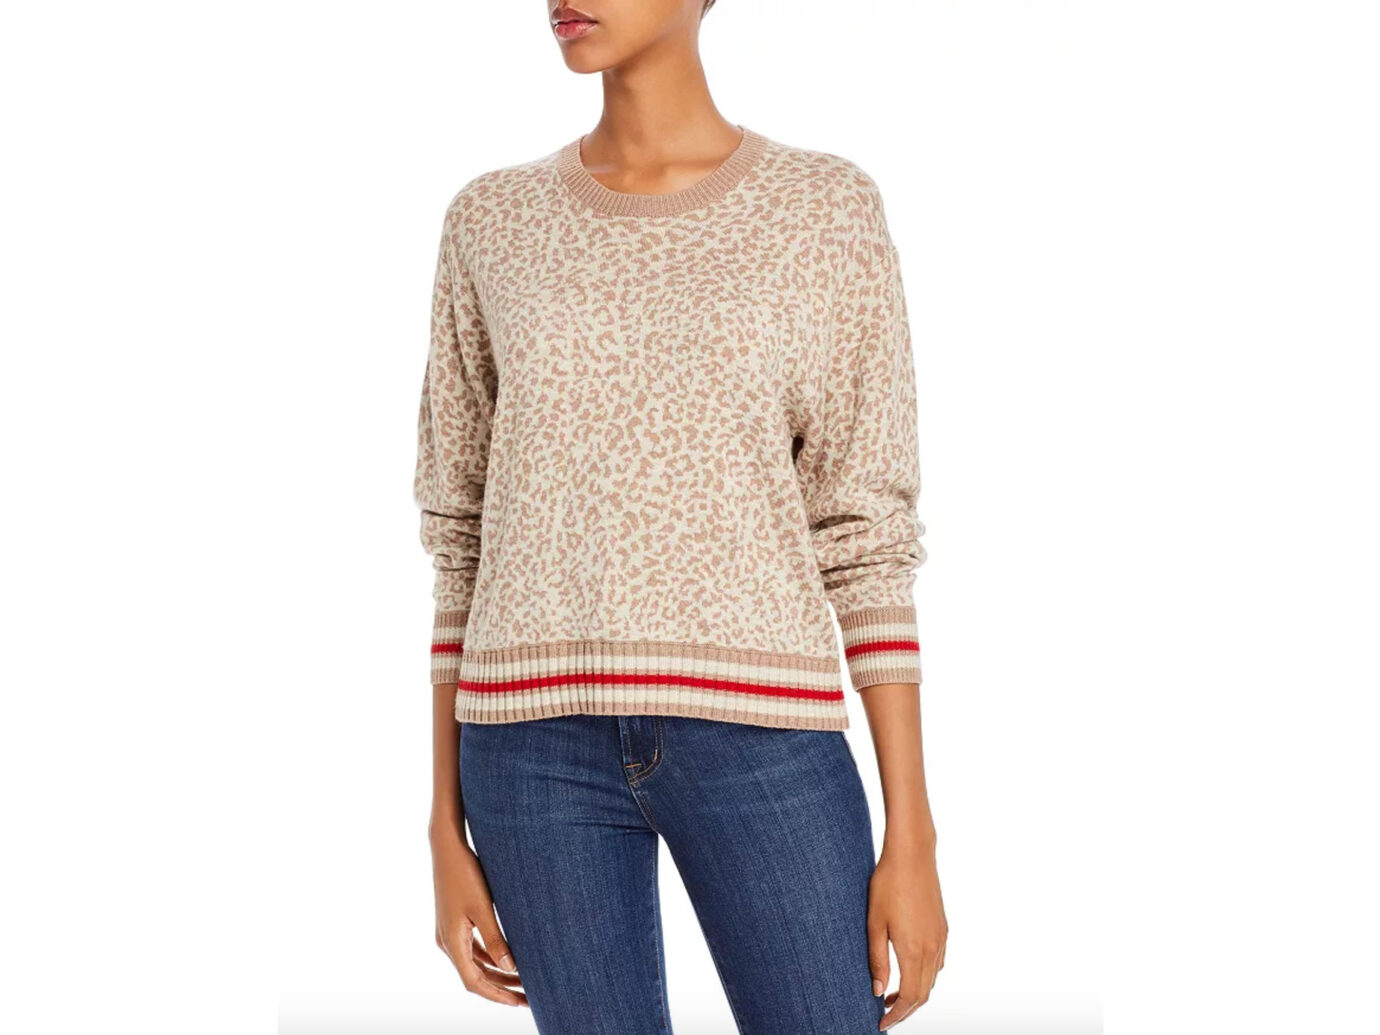 Splendid Leopard-Pattern Crewneck Sweater